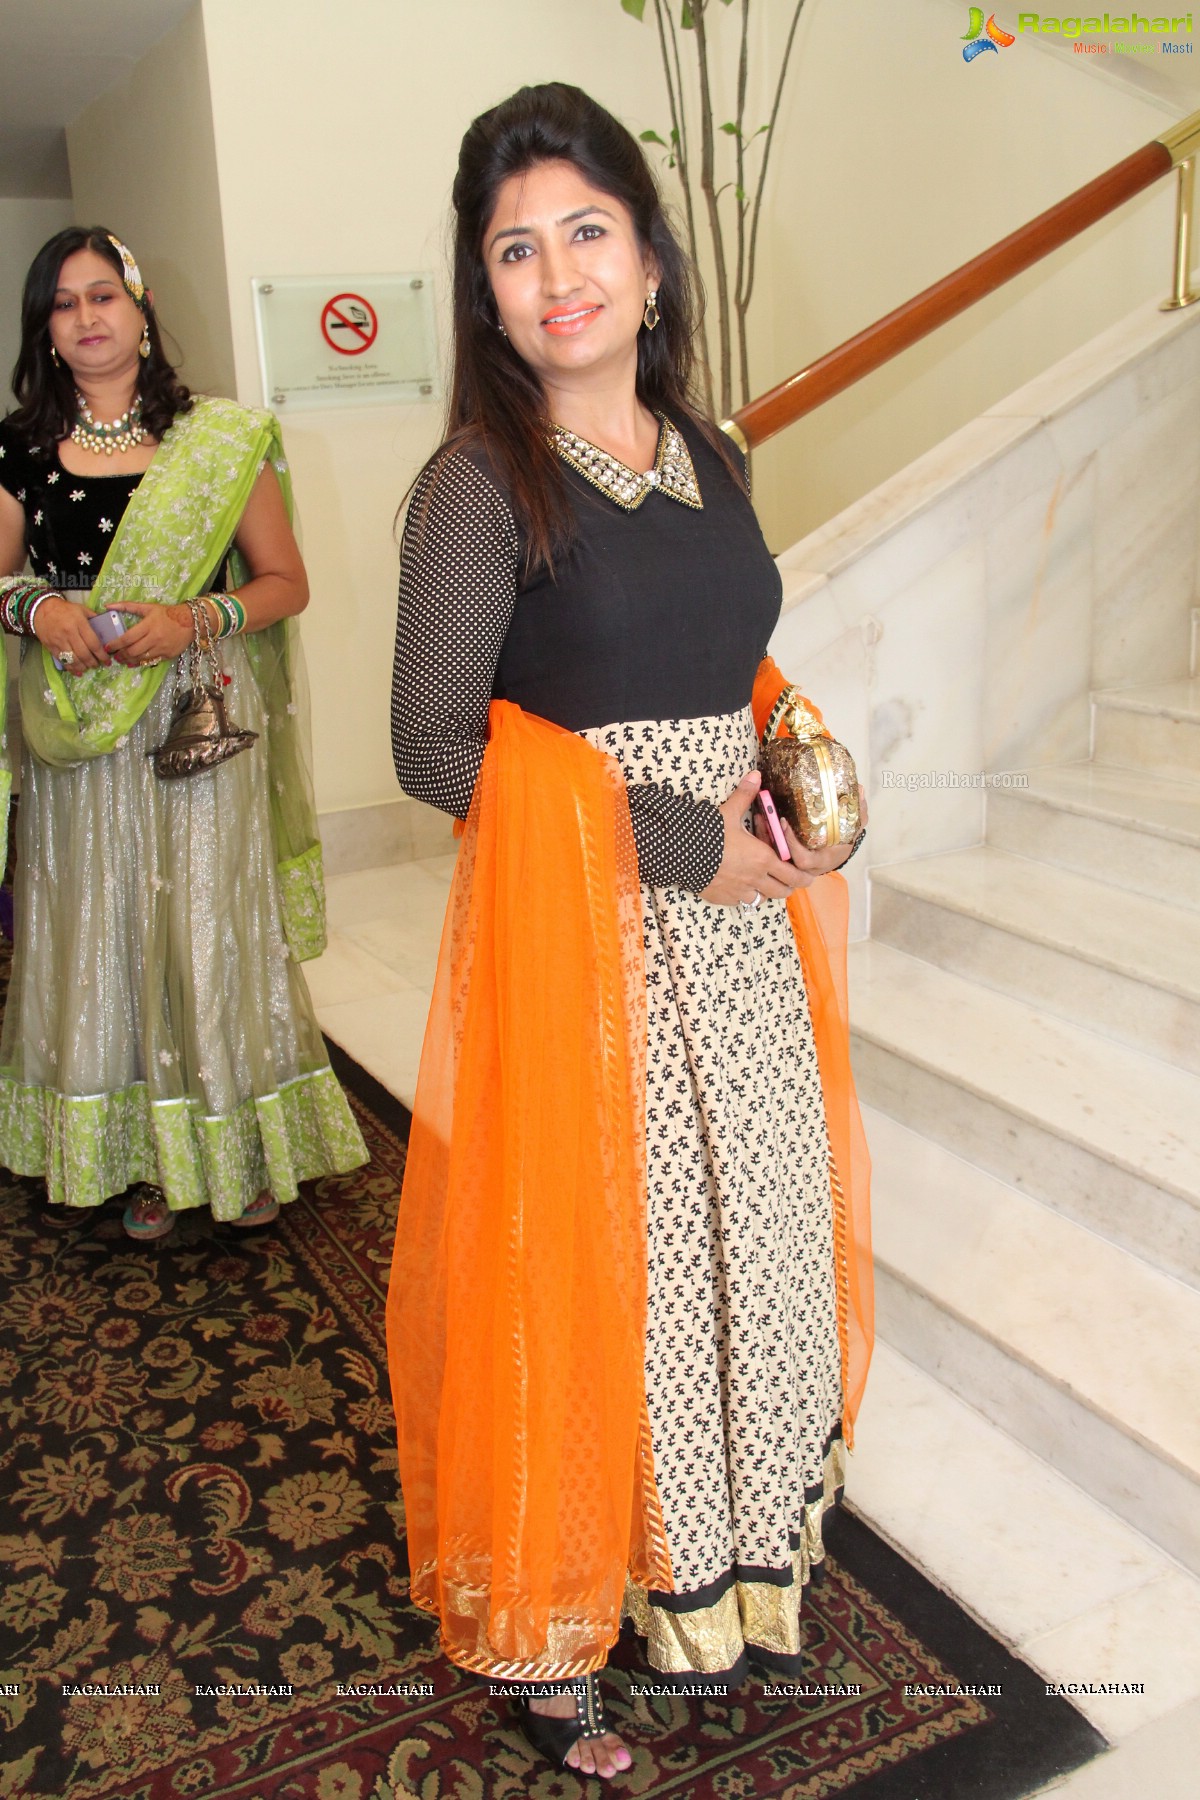 Se La Vie's Anarkali's and Antyakshari Event at Taj Krishna, Hyderabad